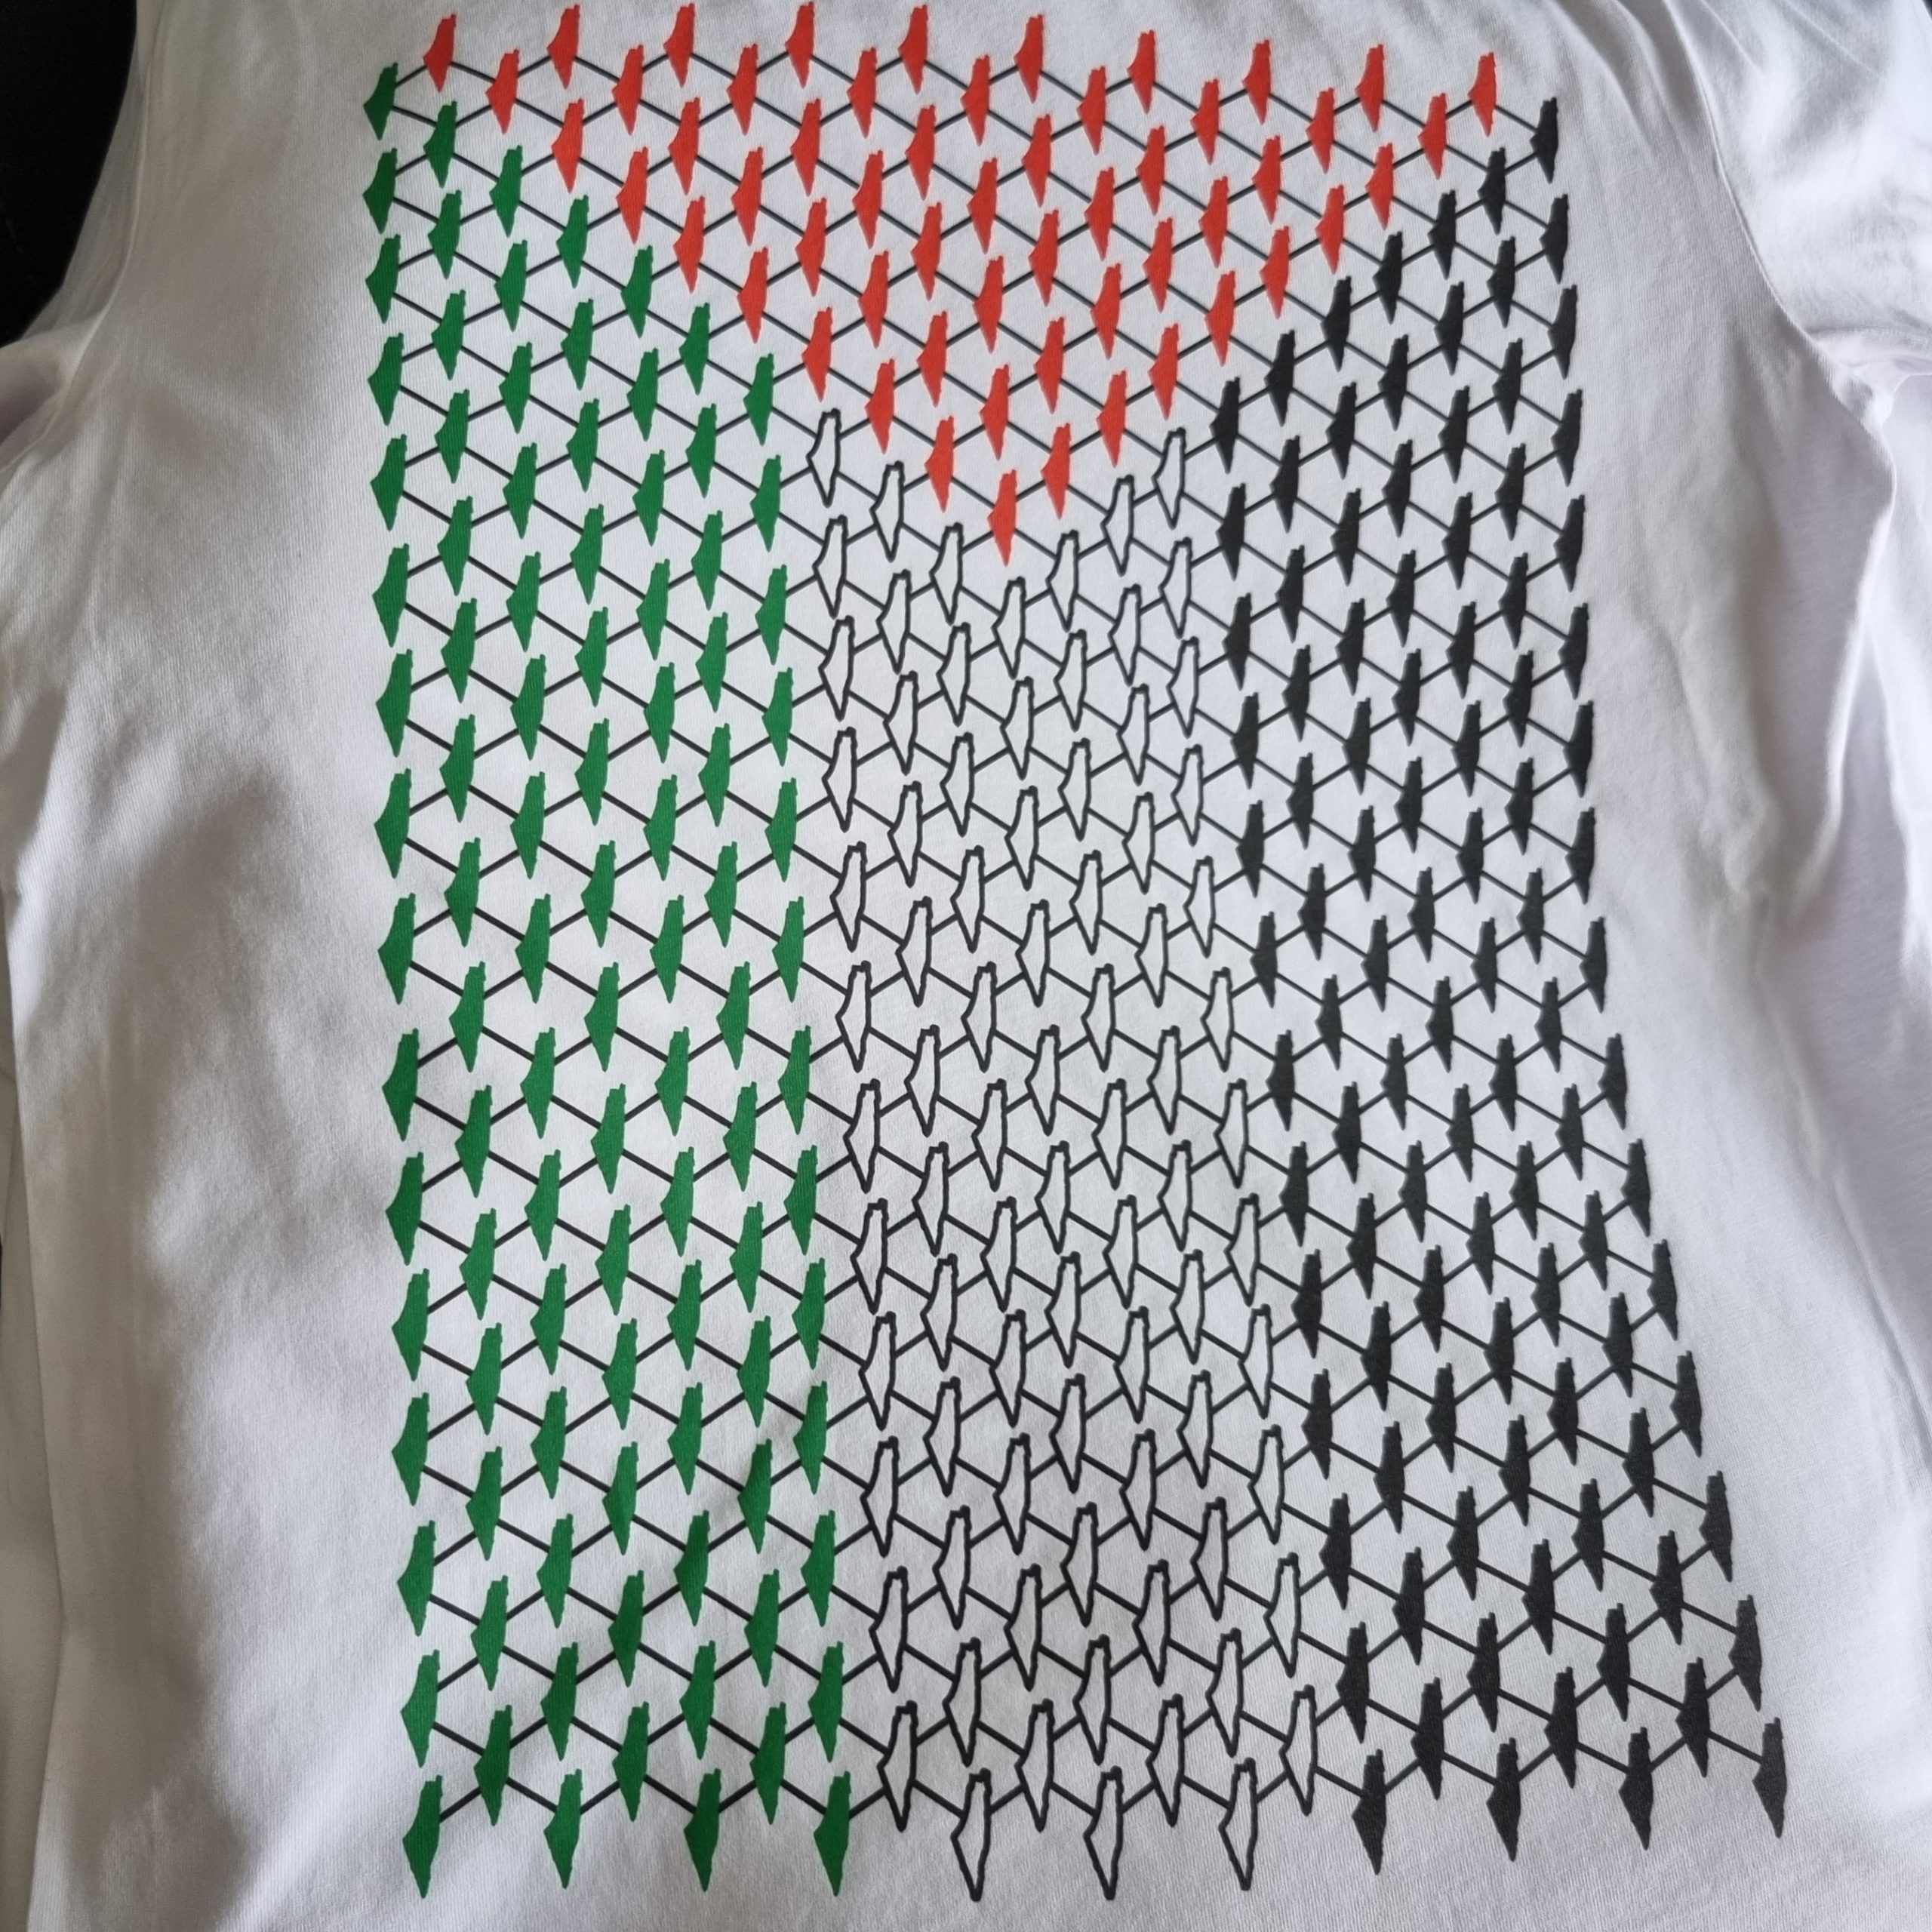 Map of Palestine Kufiya tshirt